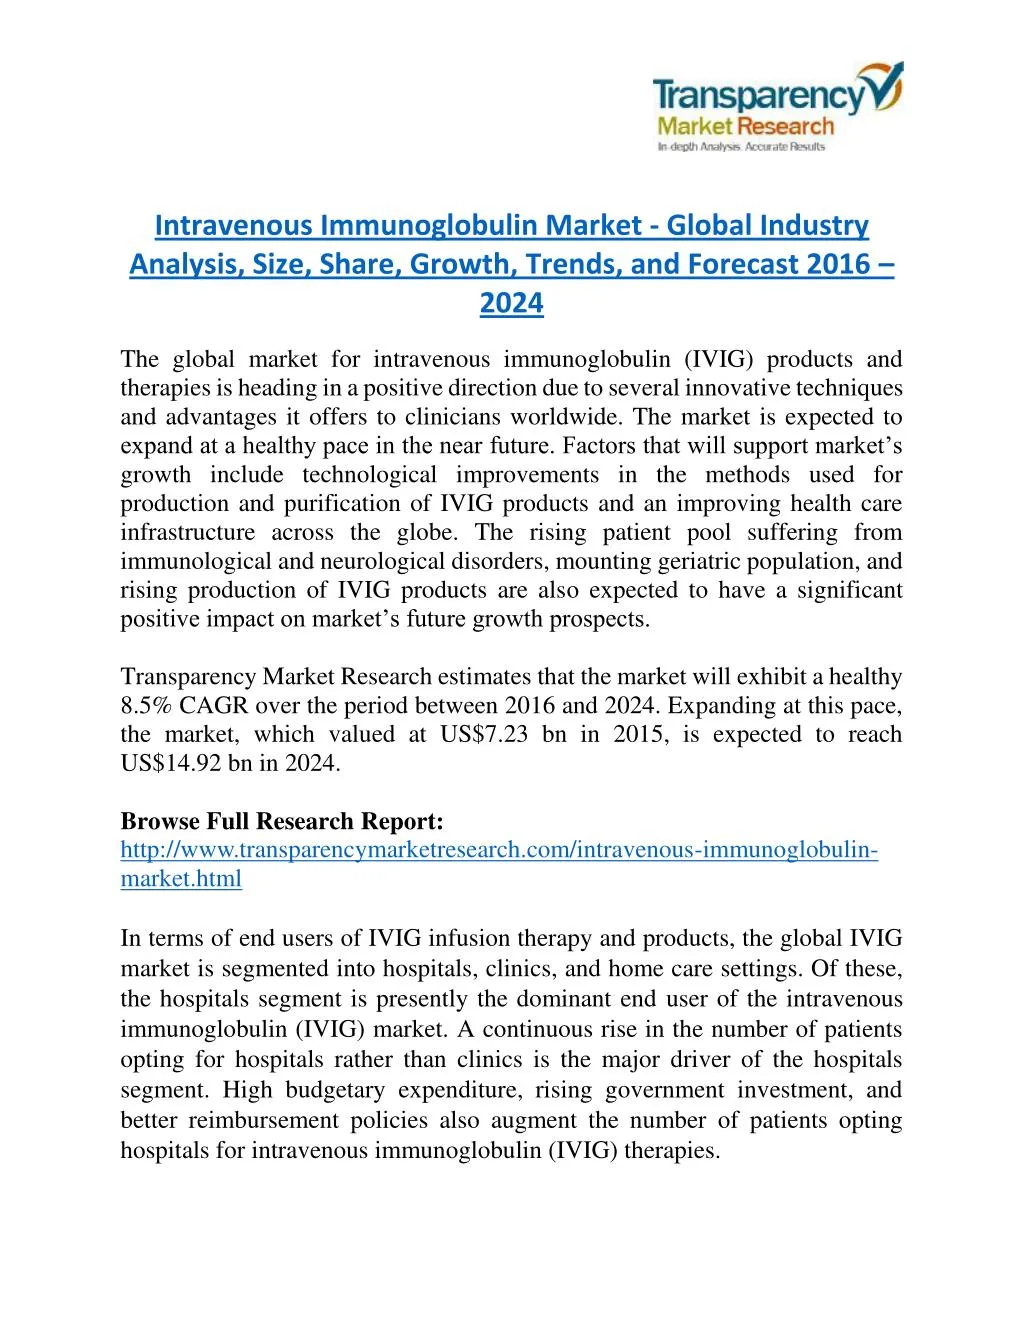 intravenous immunoglobulin market global industry